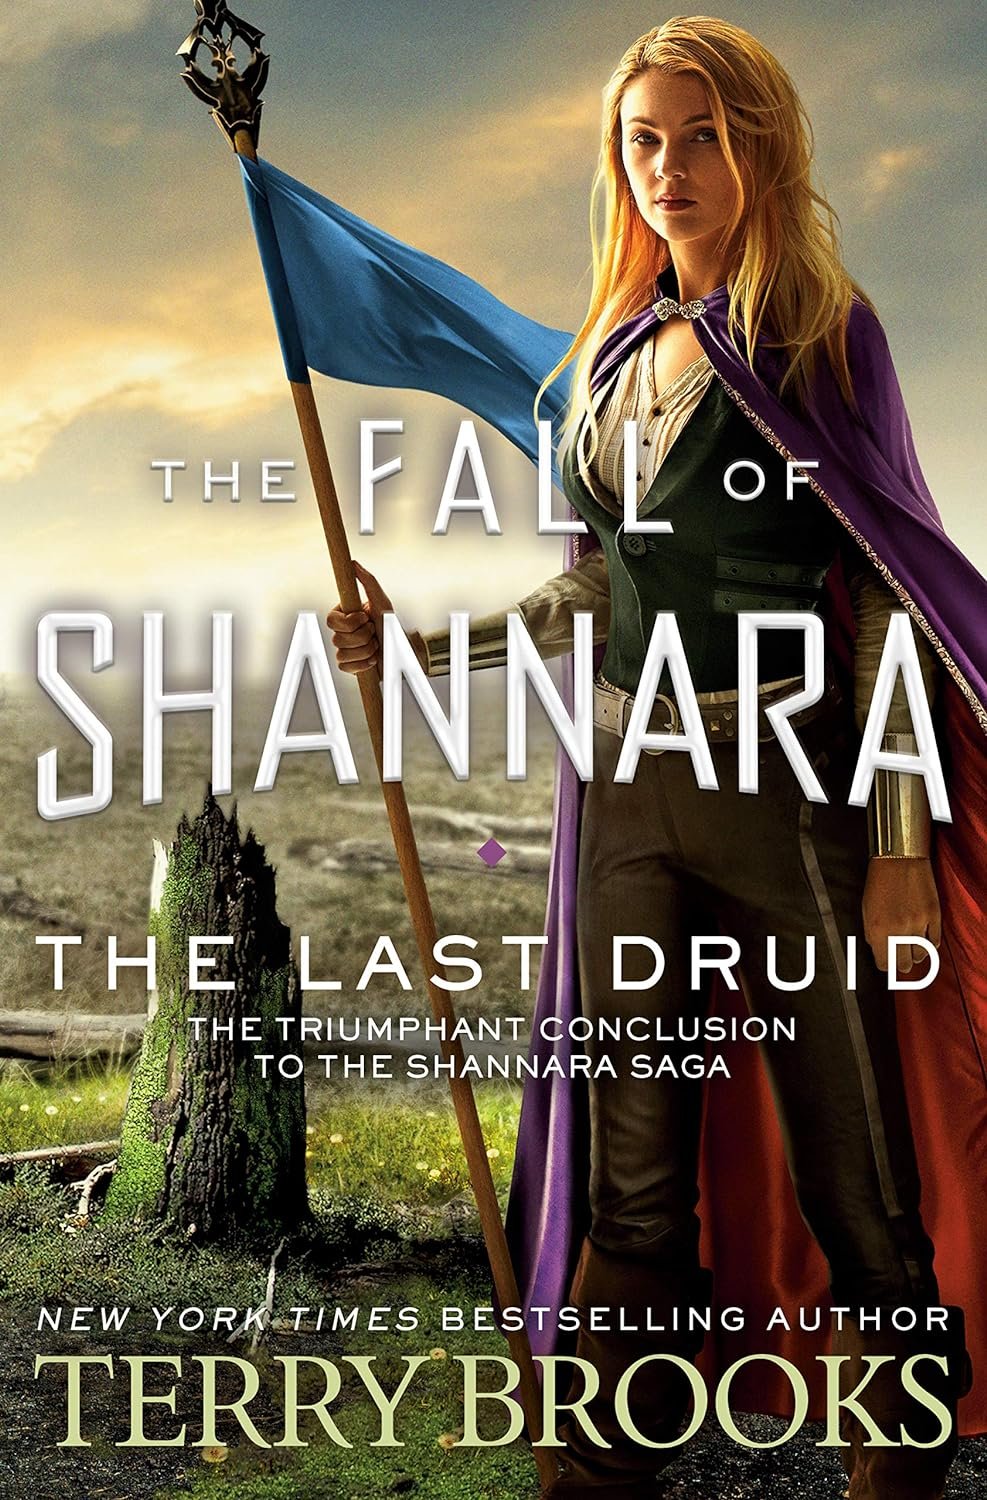 The Last Druid (The Fall of Shannara)